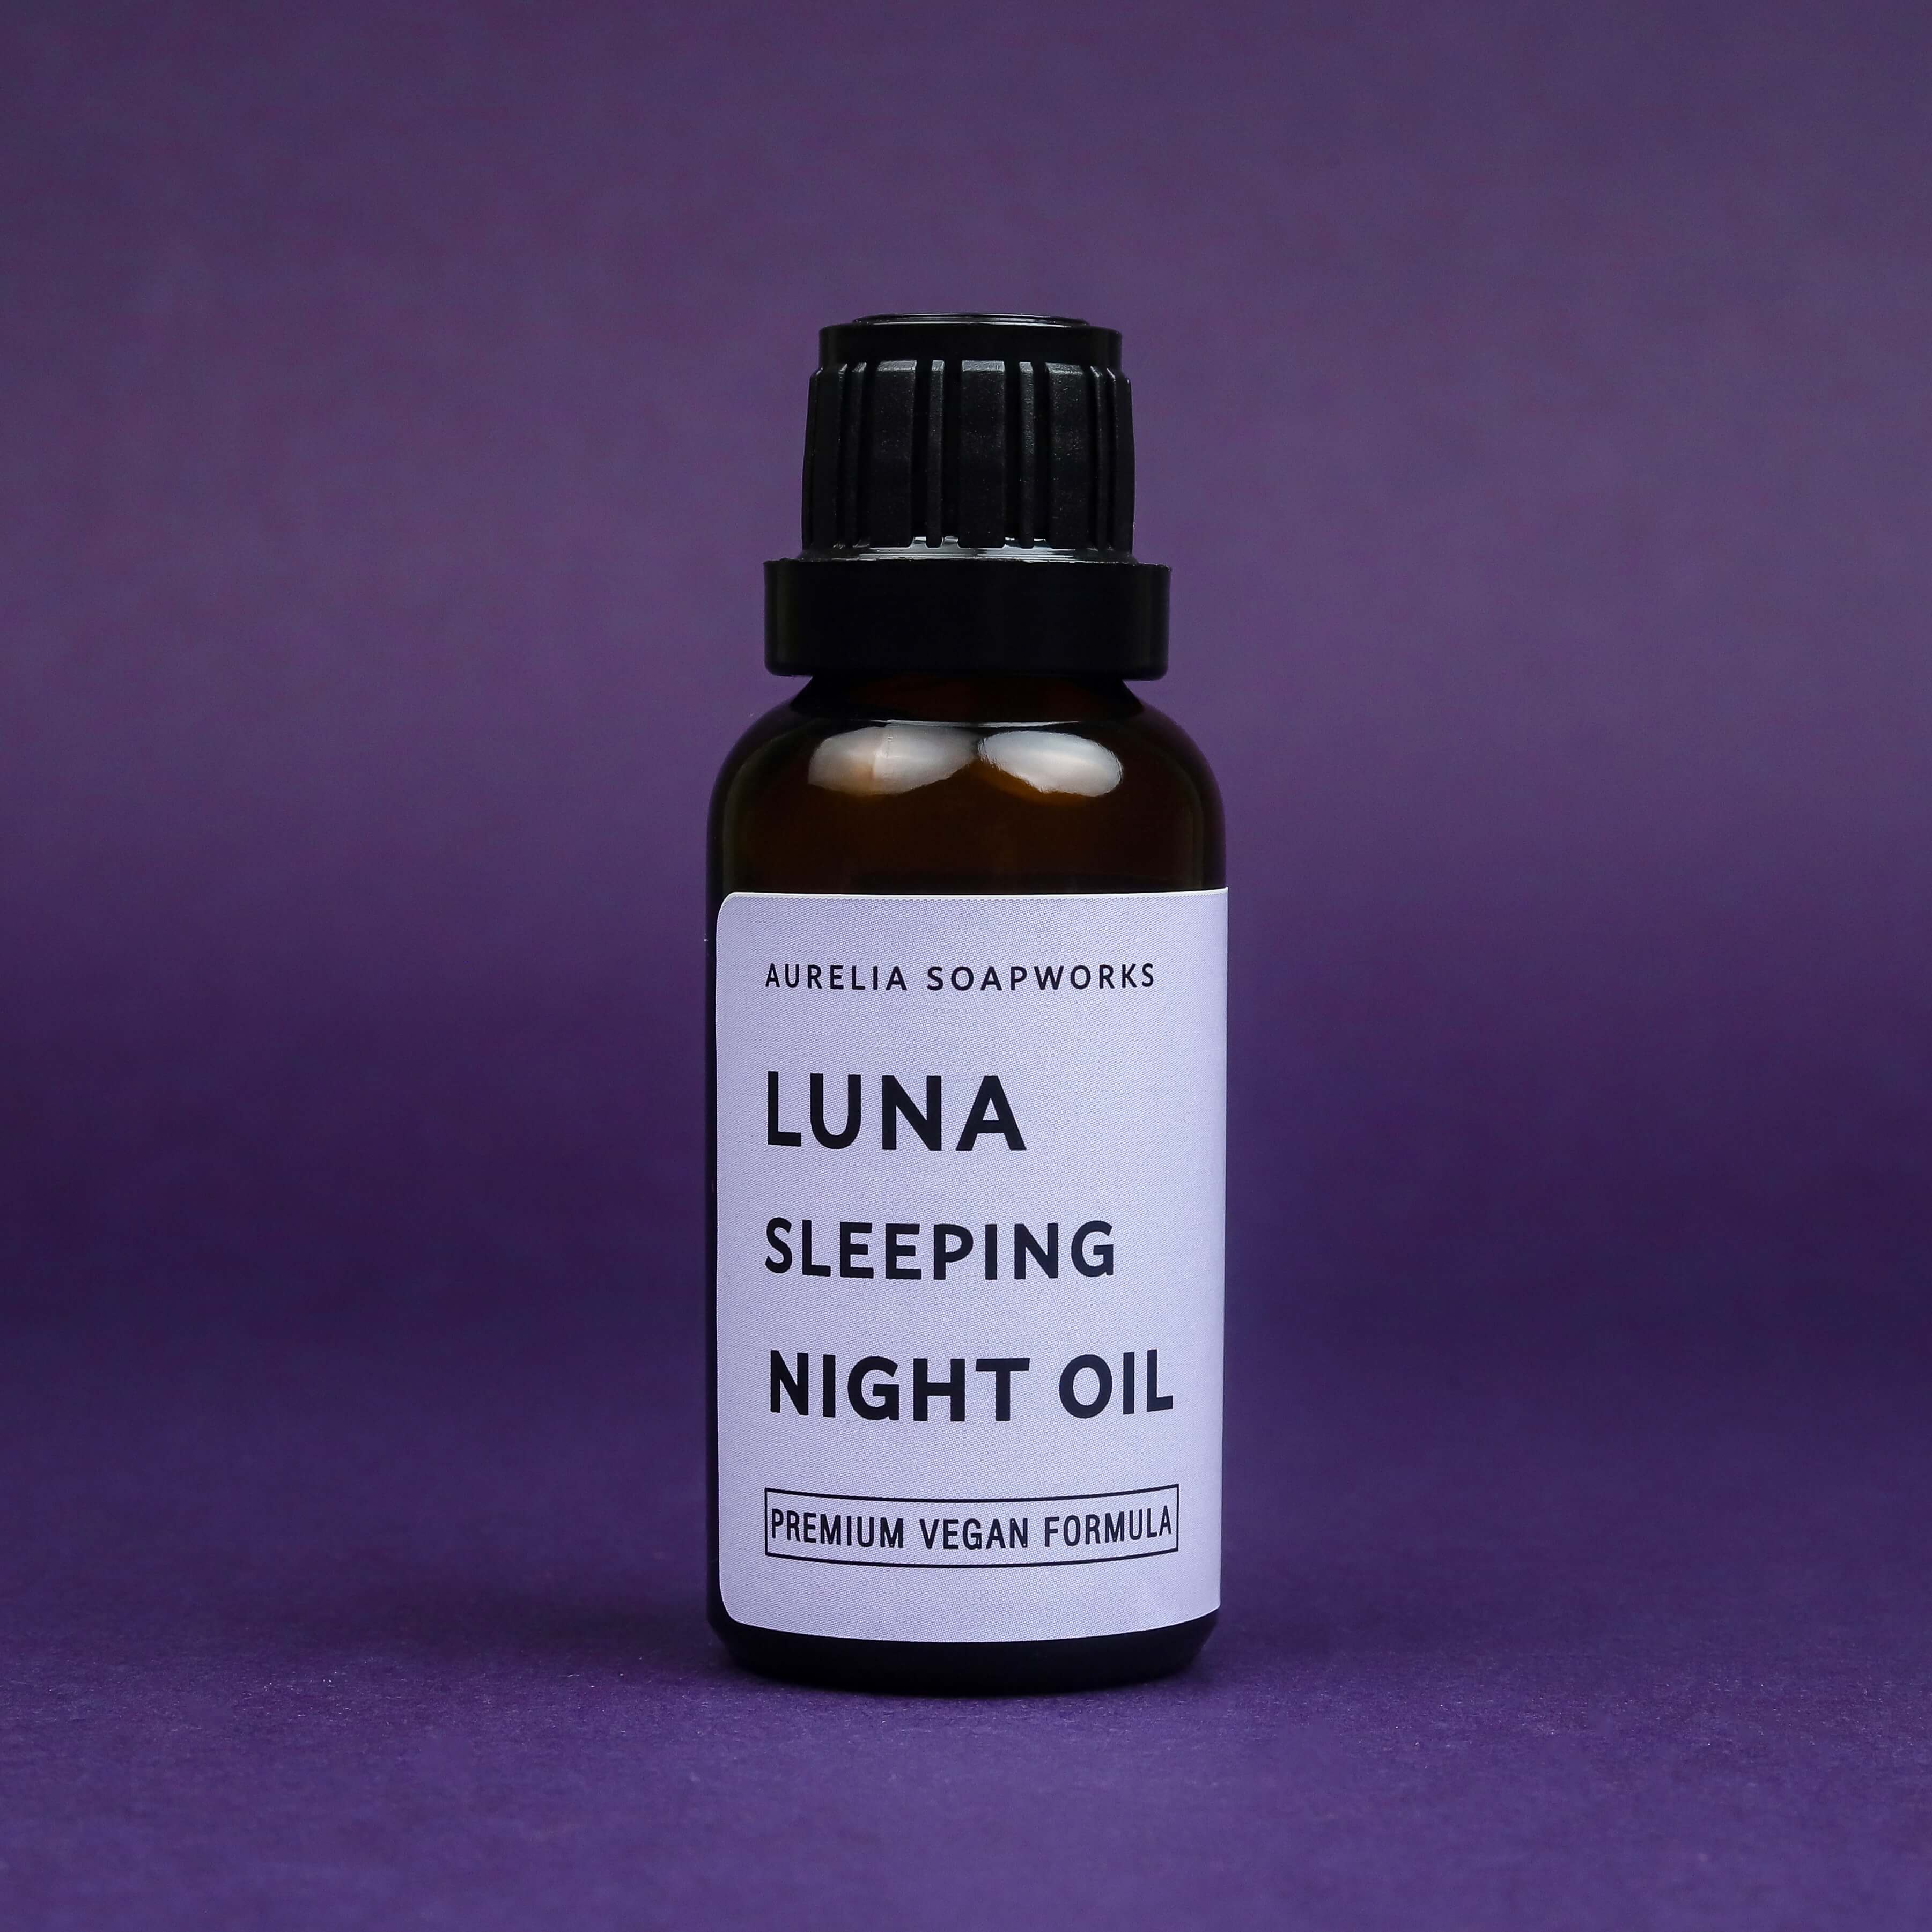 Luna sleeping night oil